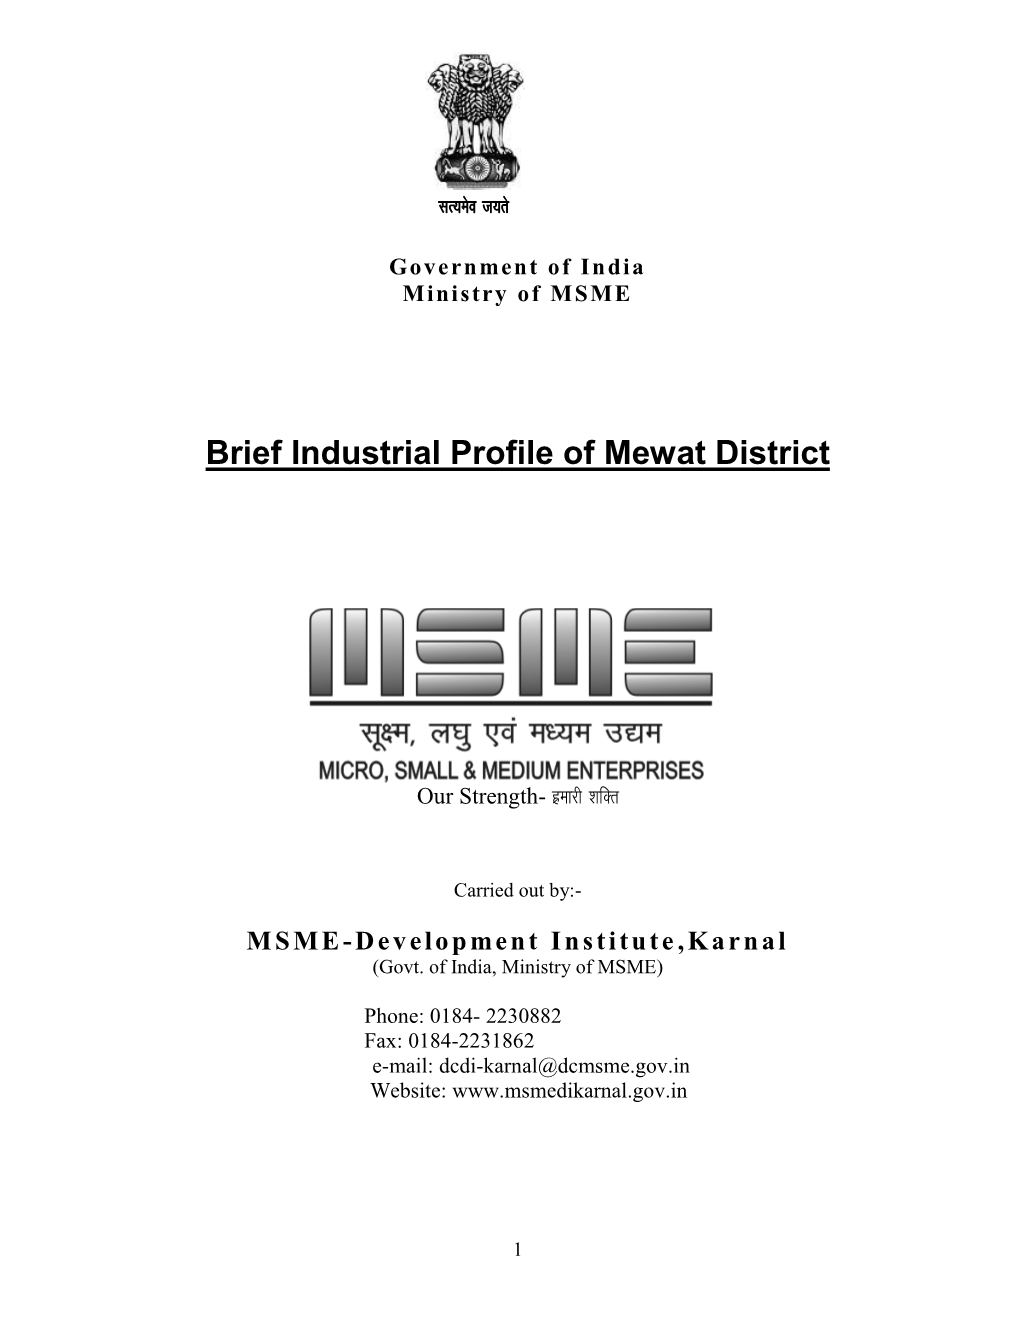 Brief Industrial Profile of Mewat District